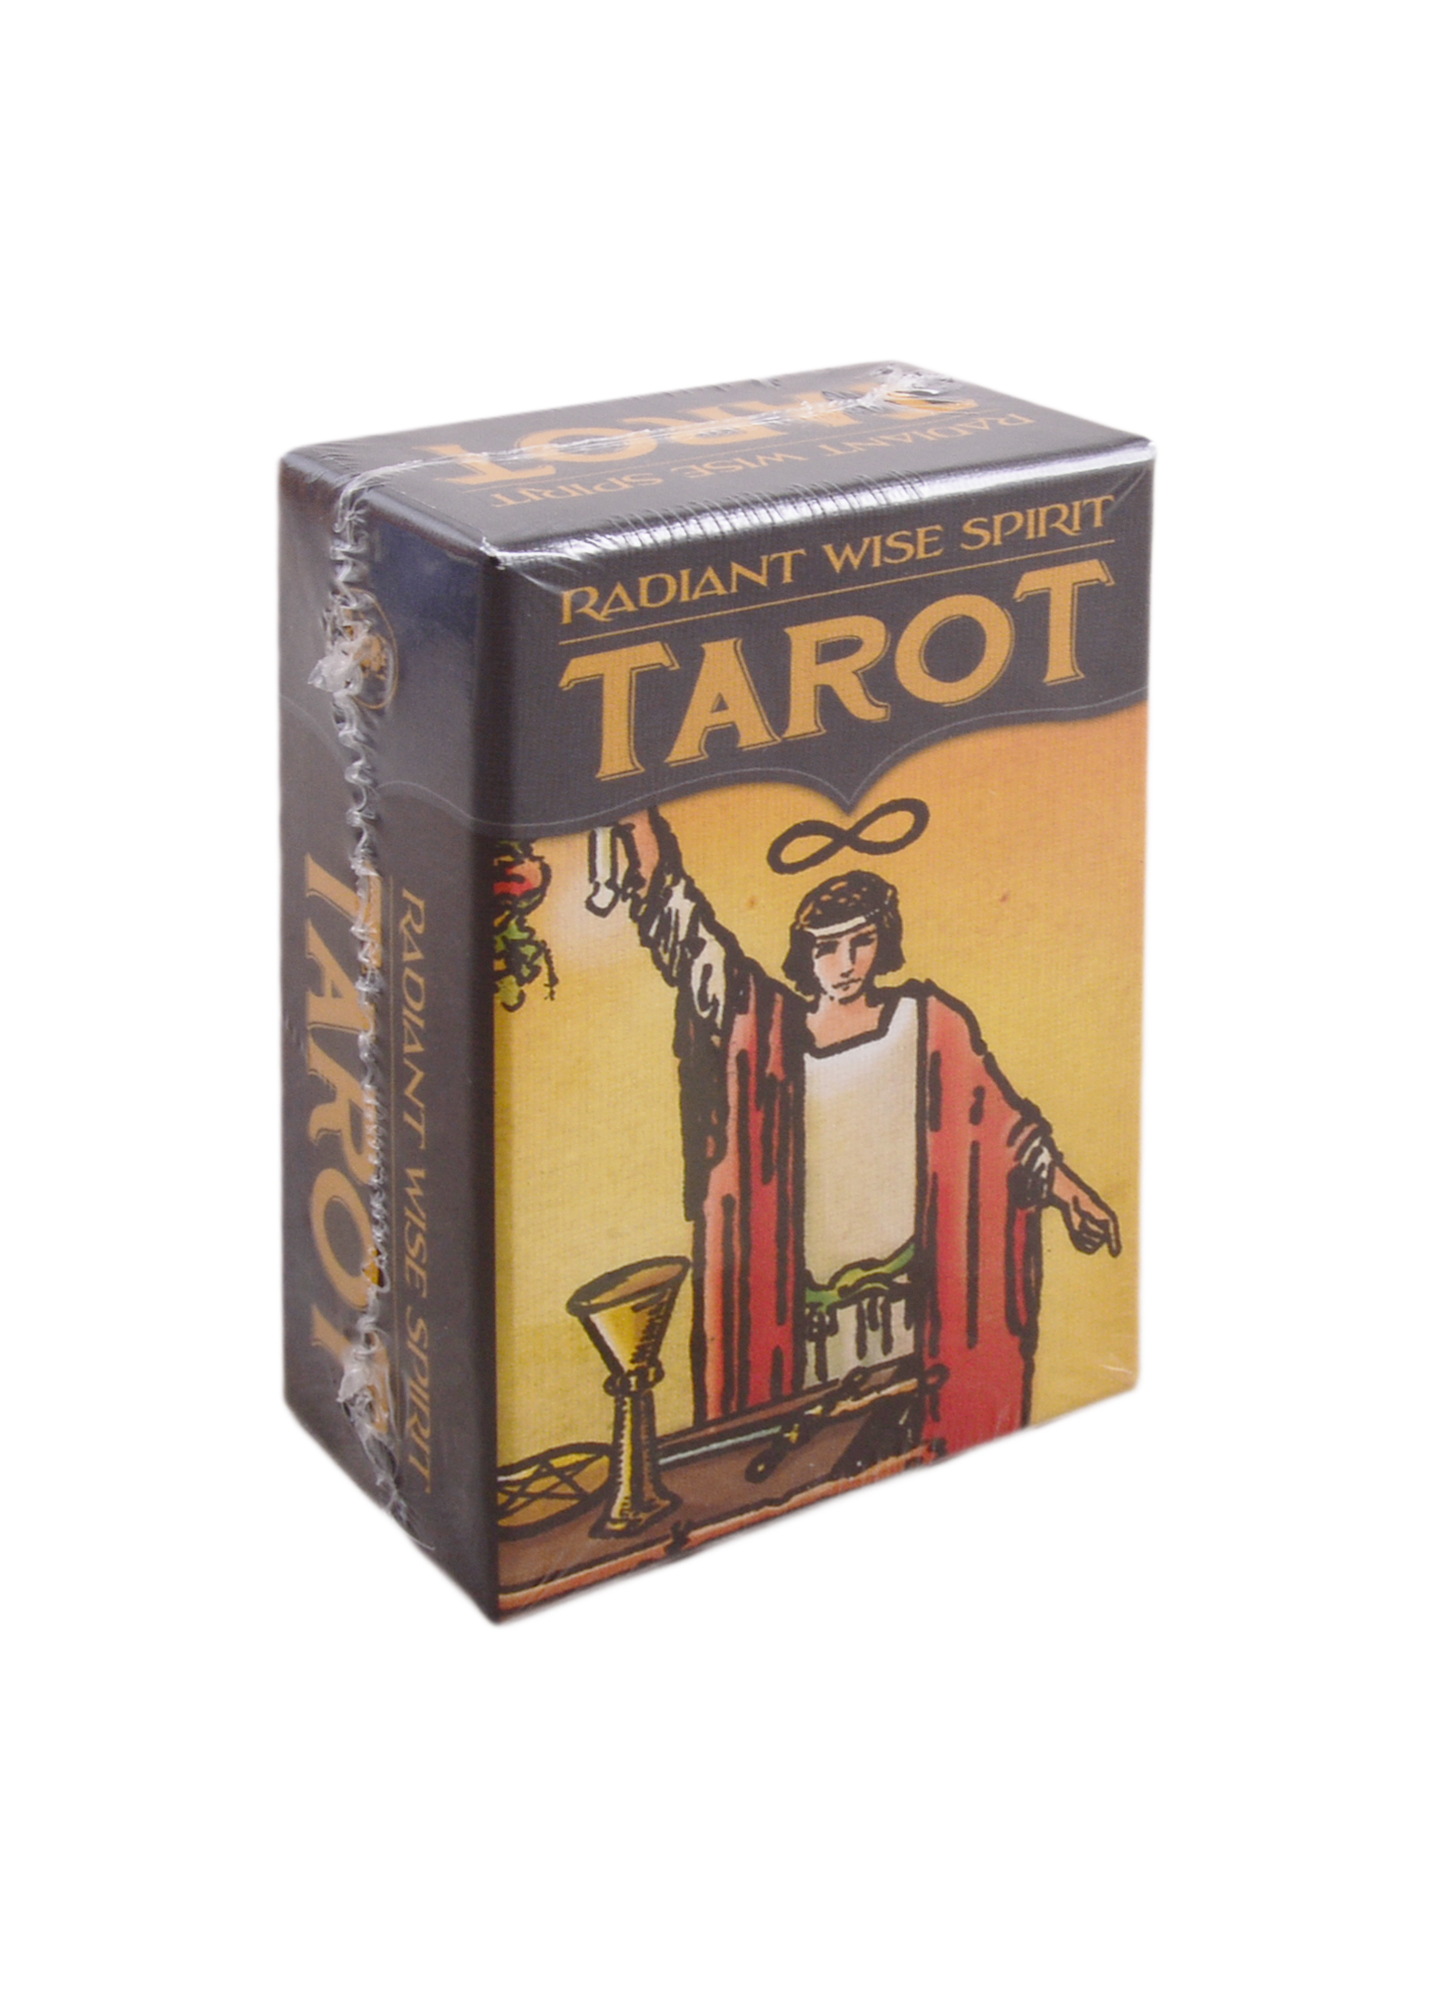 Radiant Wise Spirit Tarot wise dog tarot